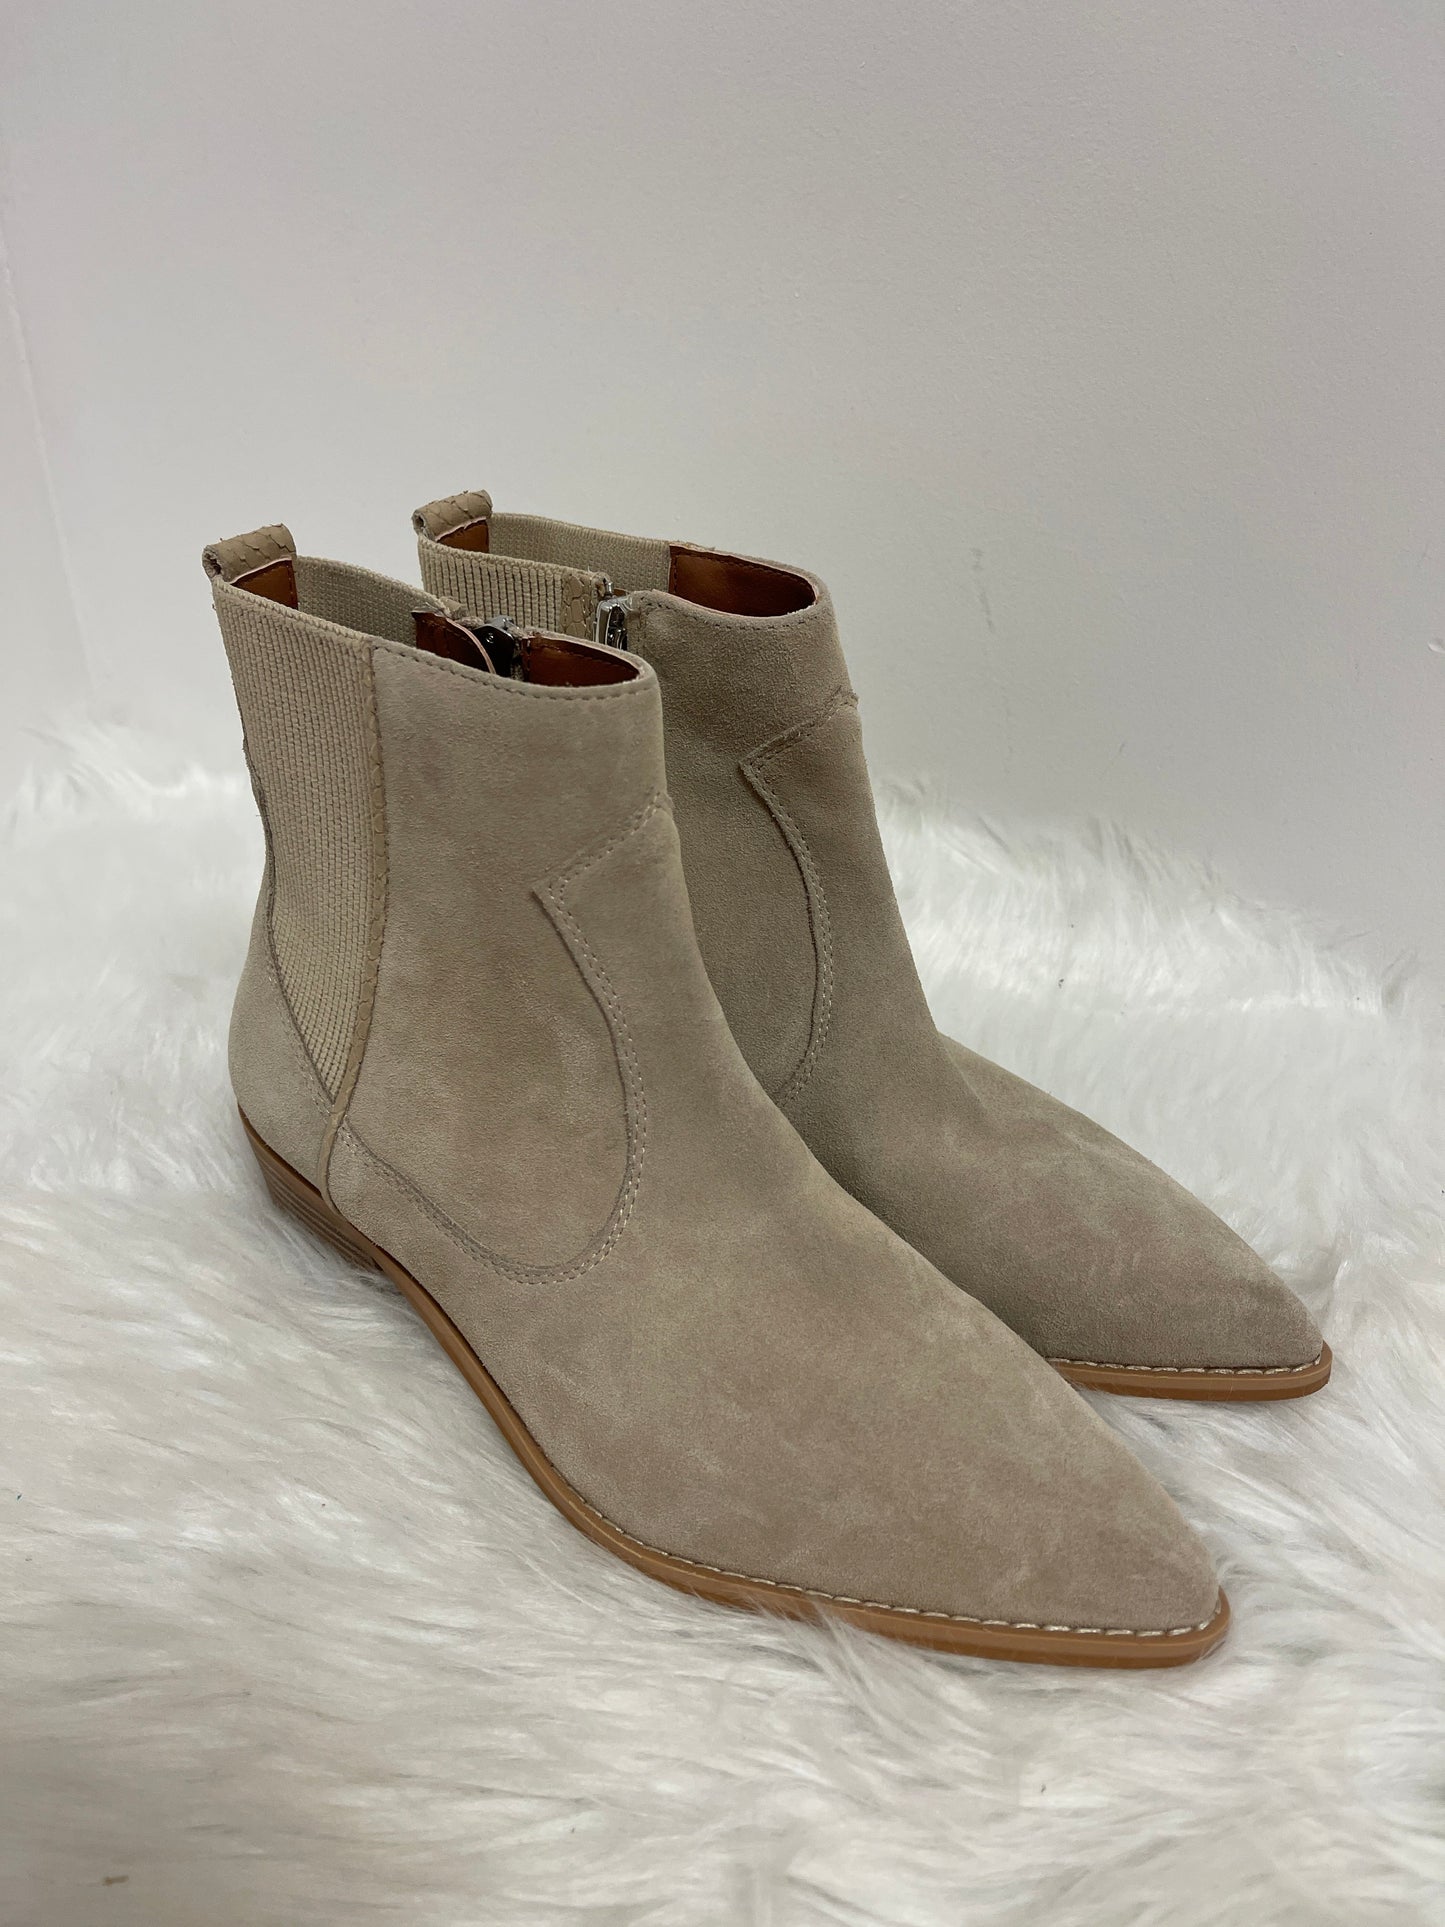 Cream Boots Ankle Flats Donald Pliner, Size 8